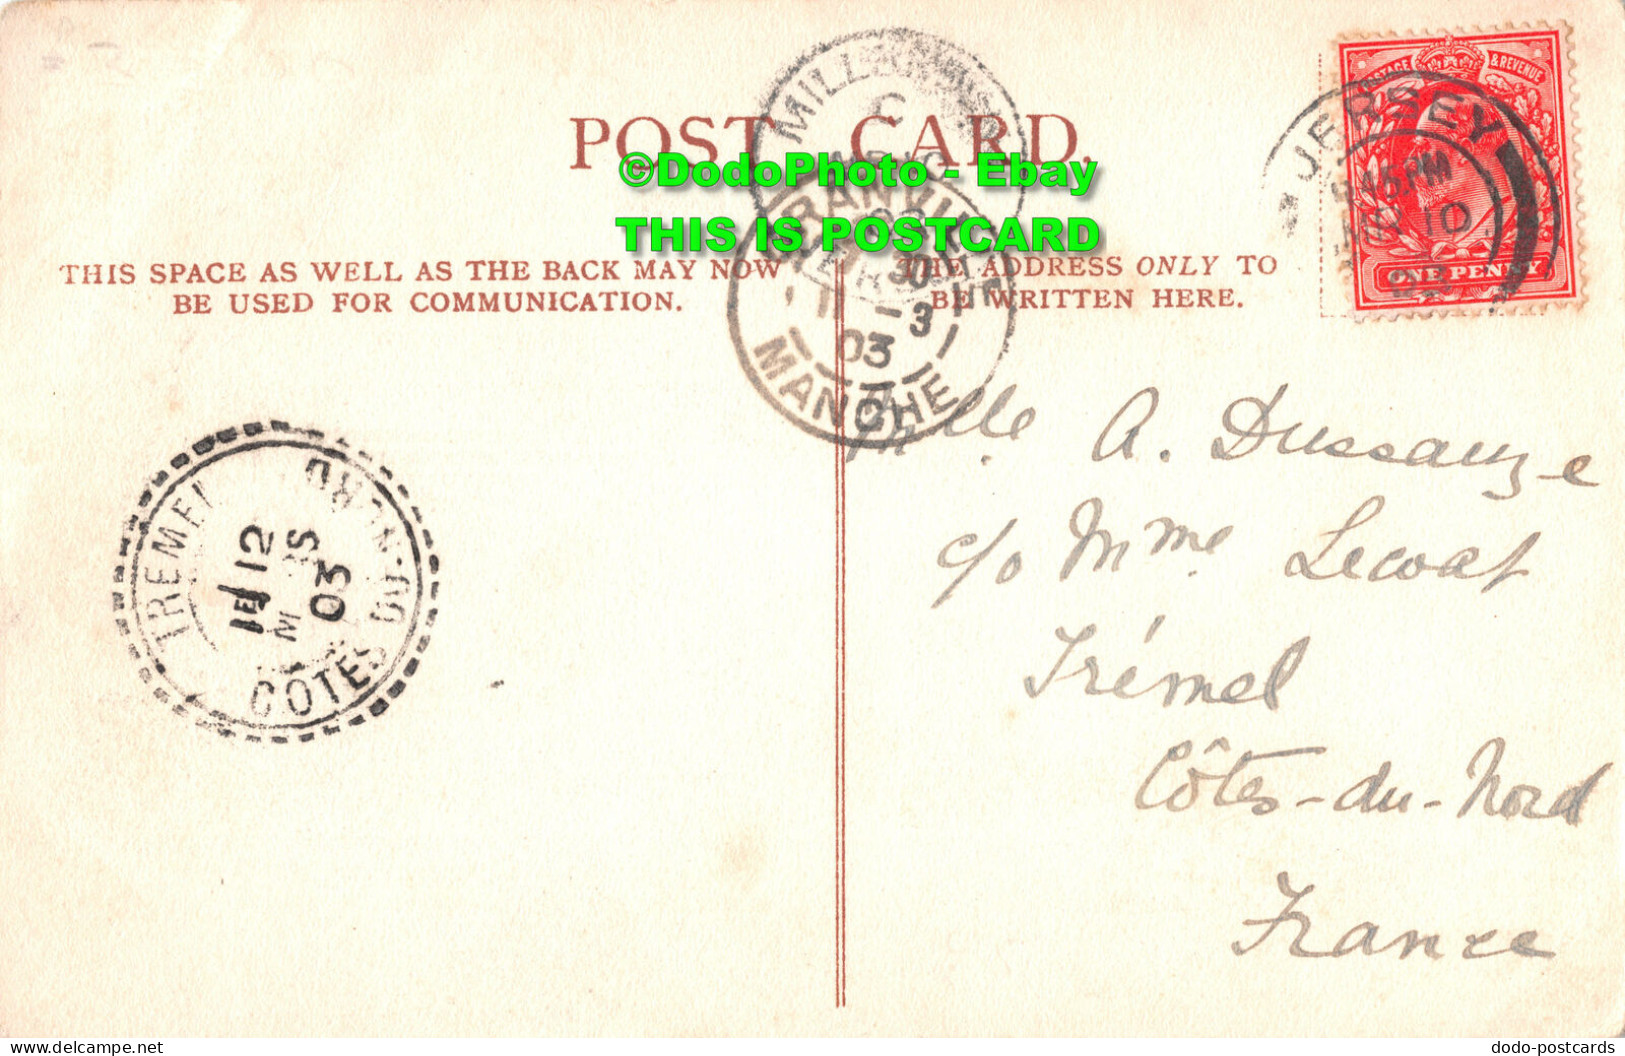 R417827 Jersey. The Royal Square. Postcard. 1903 - Monde